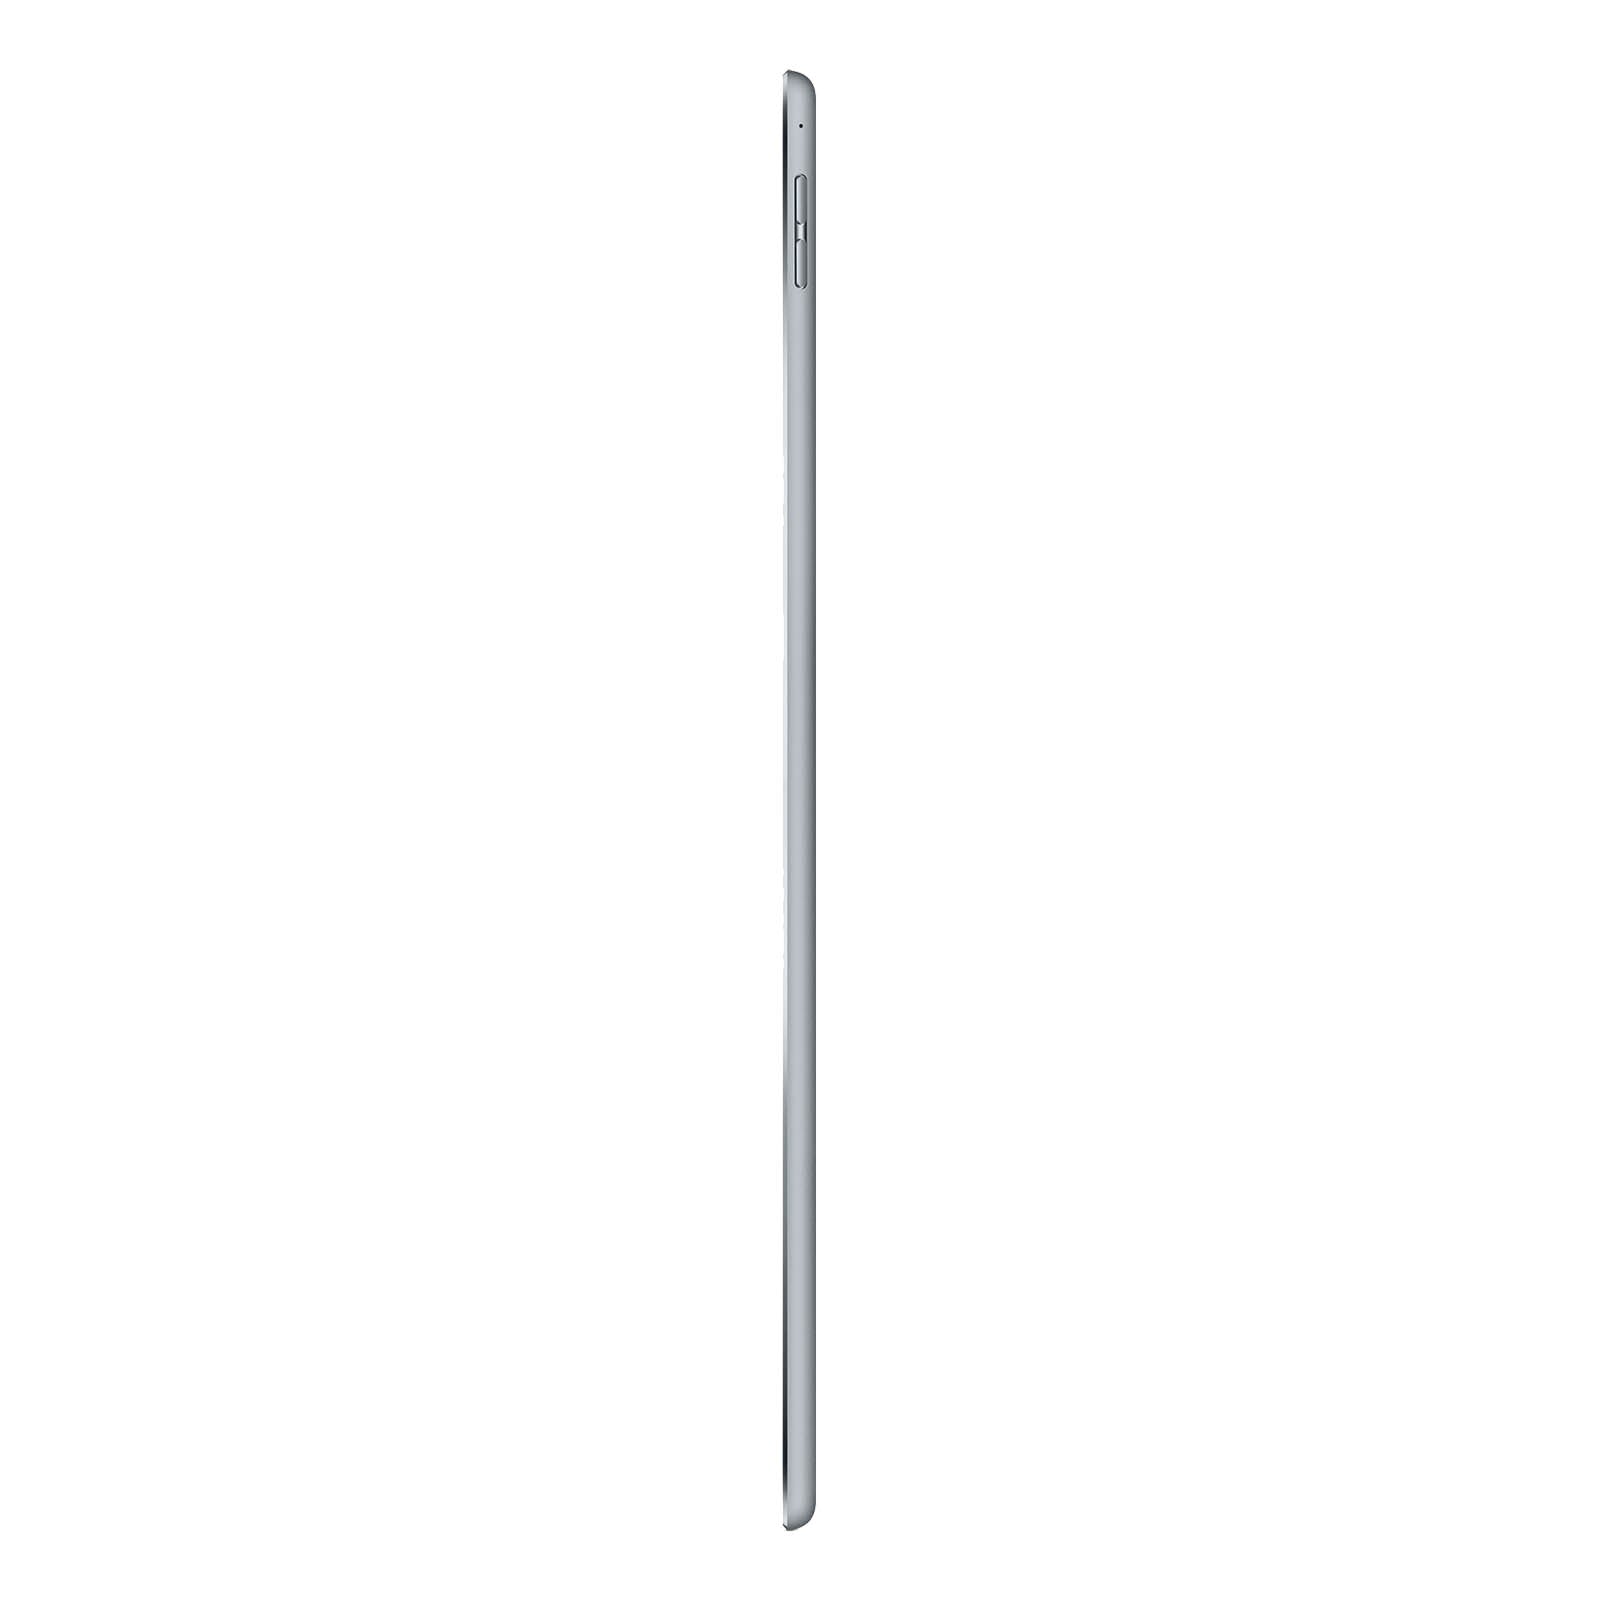 iPad Pro 12.9 Inch 2nd Gen 64GB Space Grey Good - WiFi